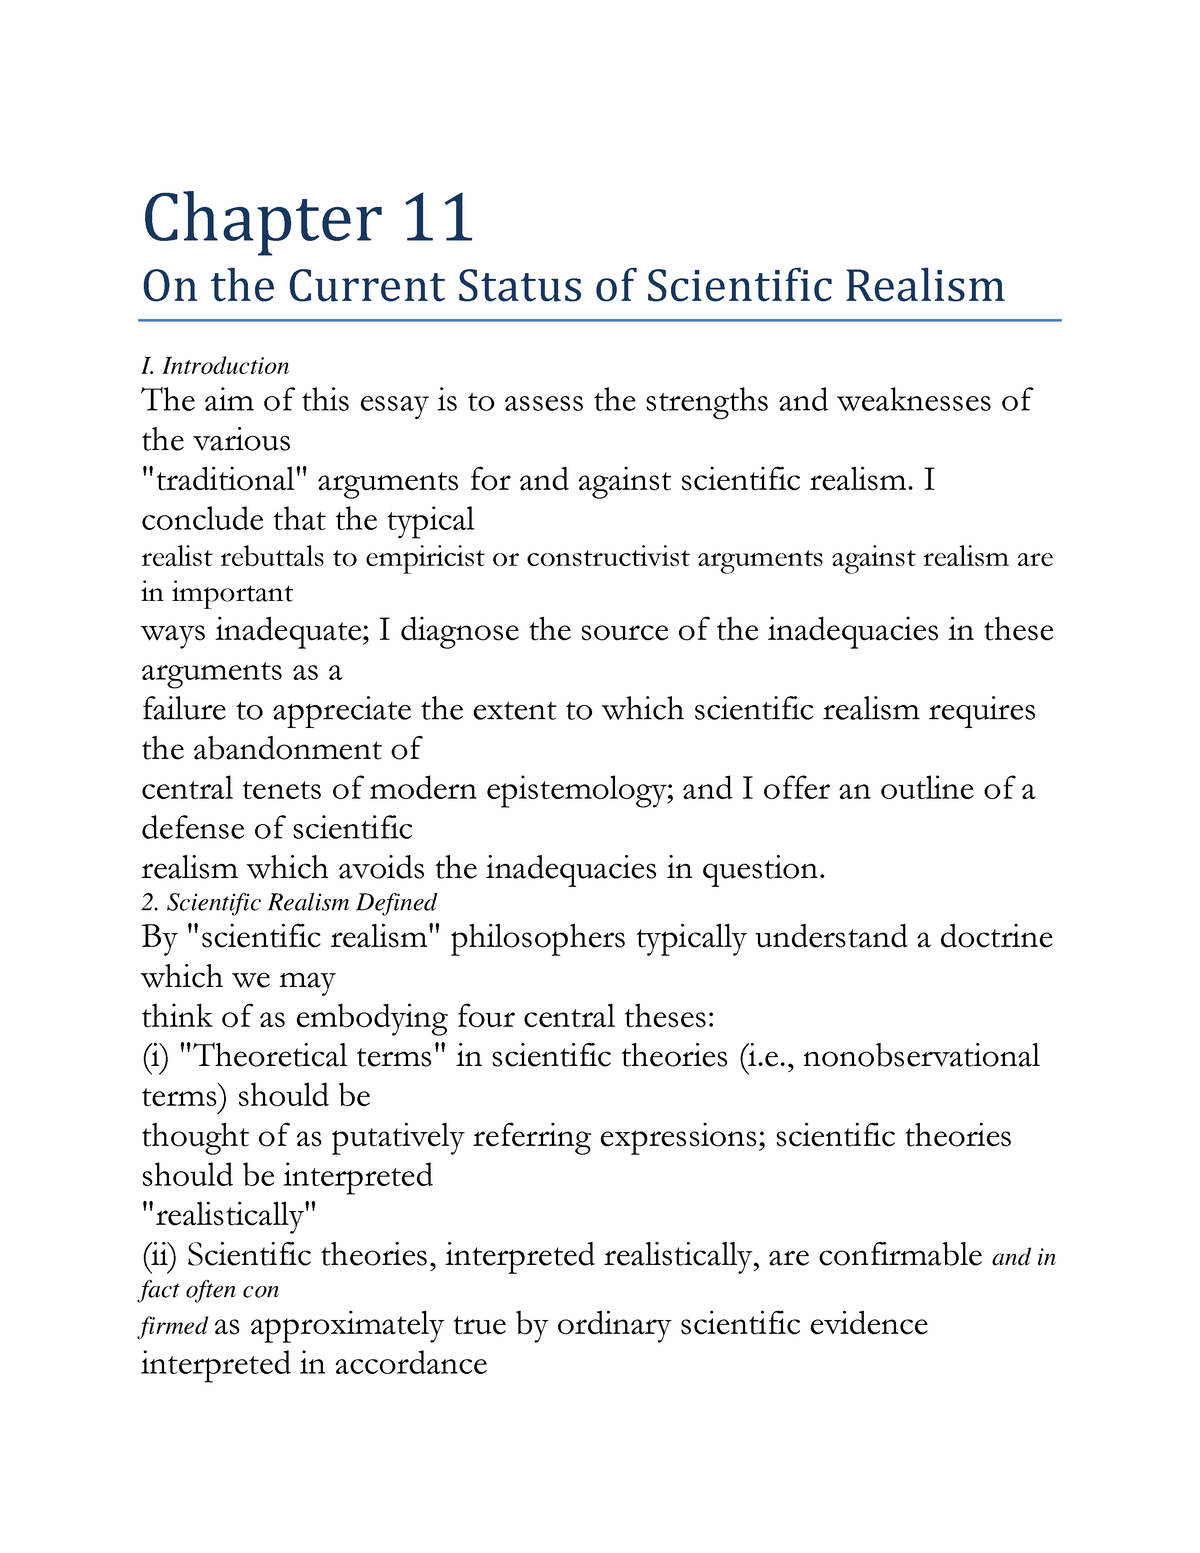 scientific realism essay